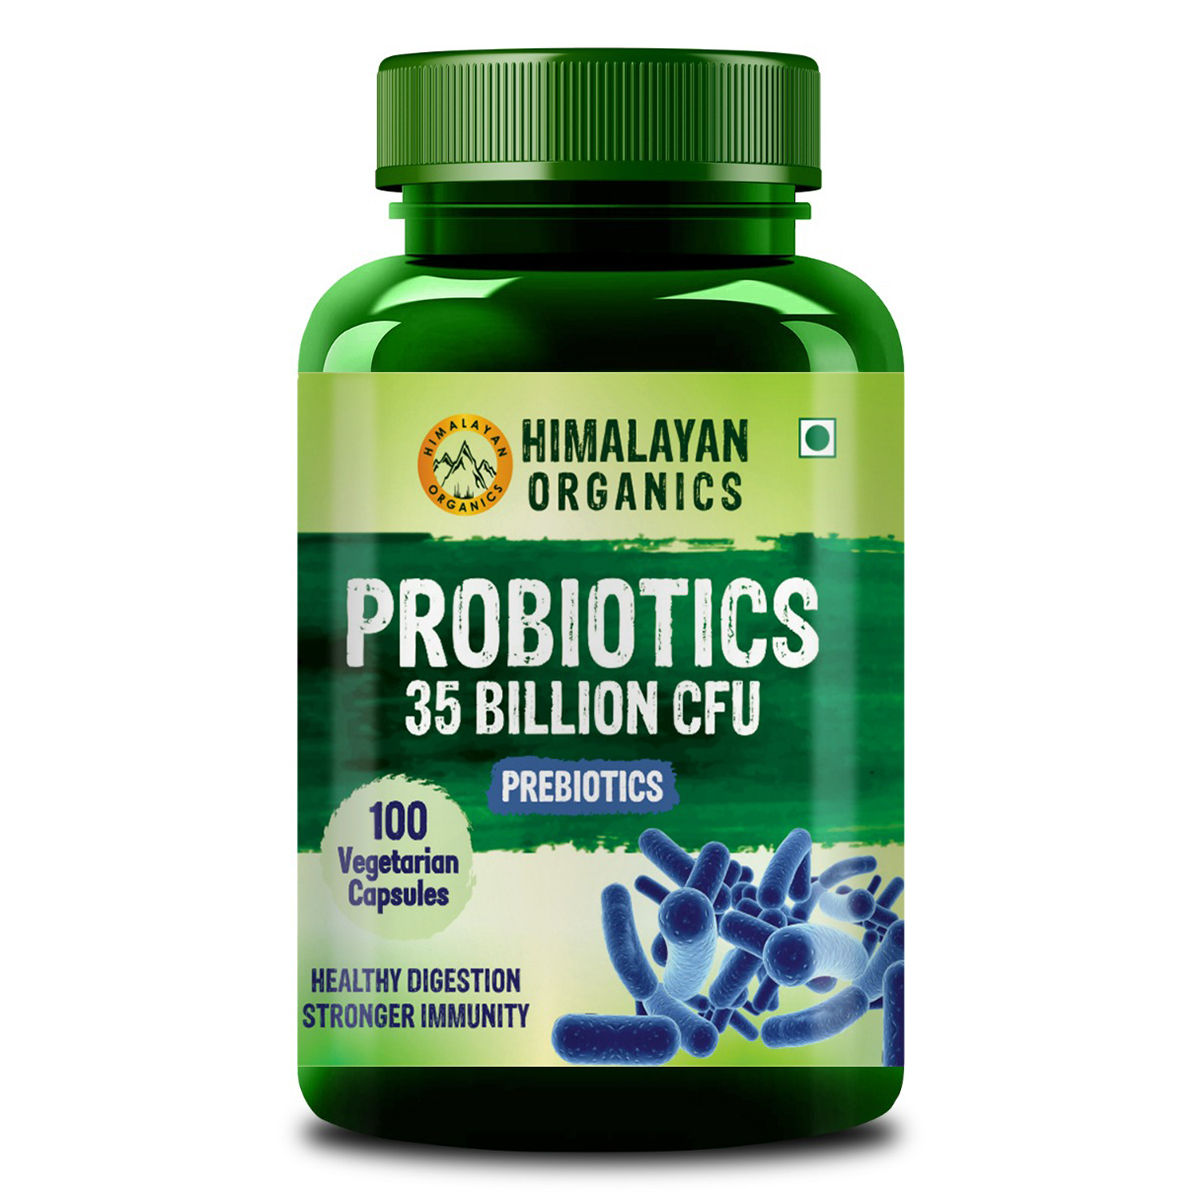 Buy Himalayan Organics Probiotics 35 Billion CFU with Prebiotics, 100 Capsules Online